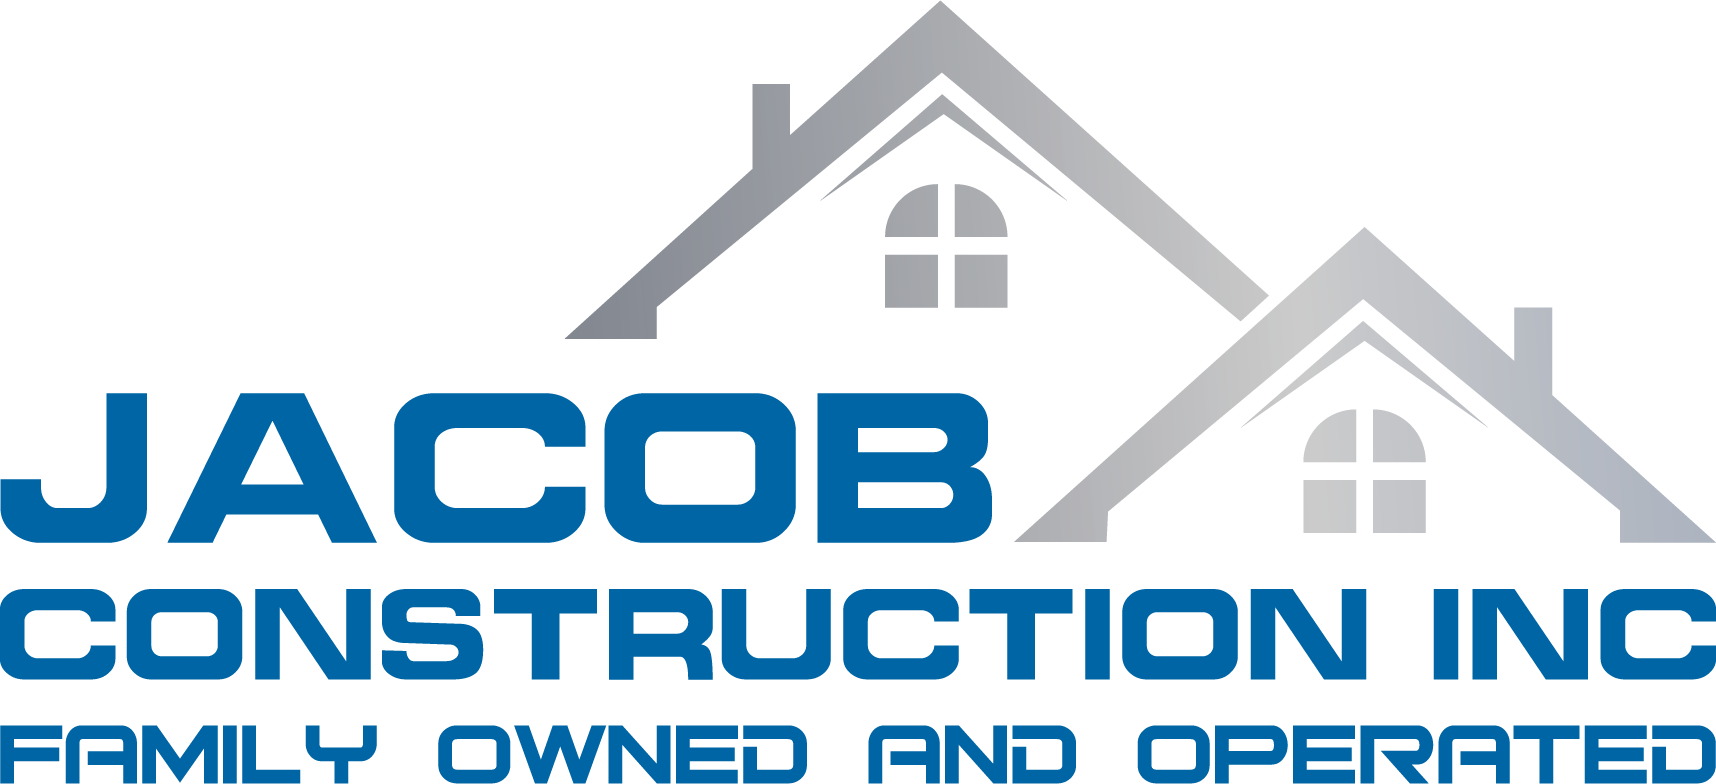 Jacob-Construction-logo@2x